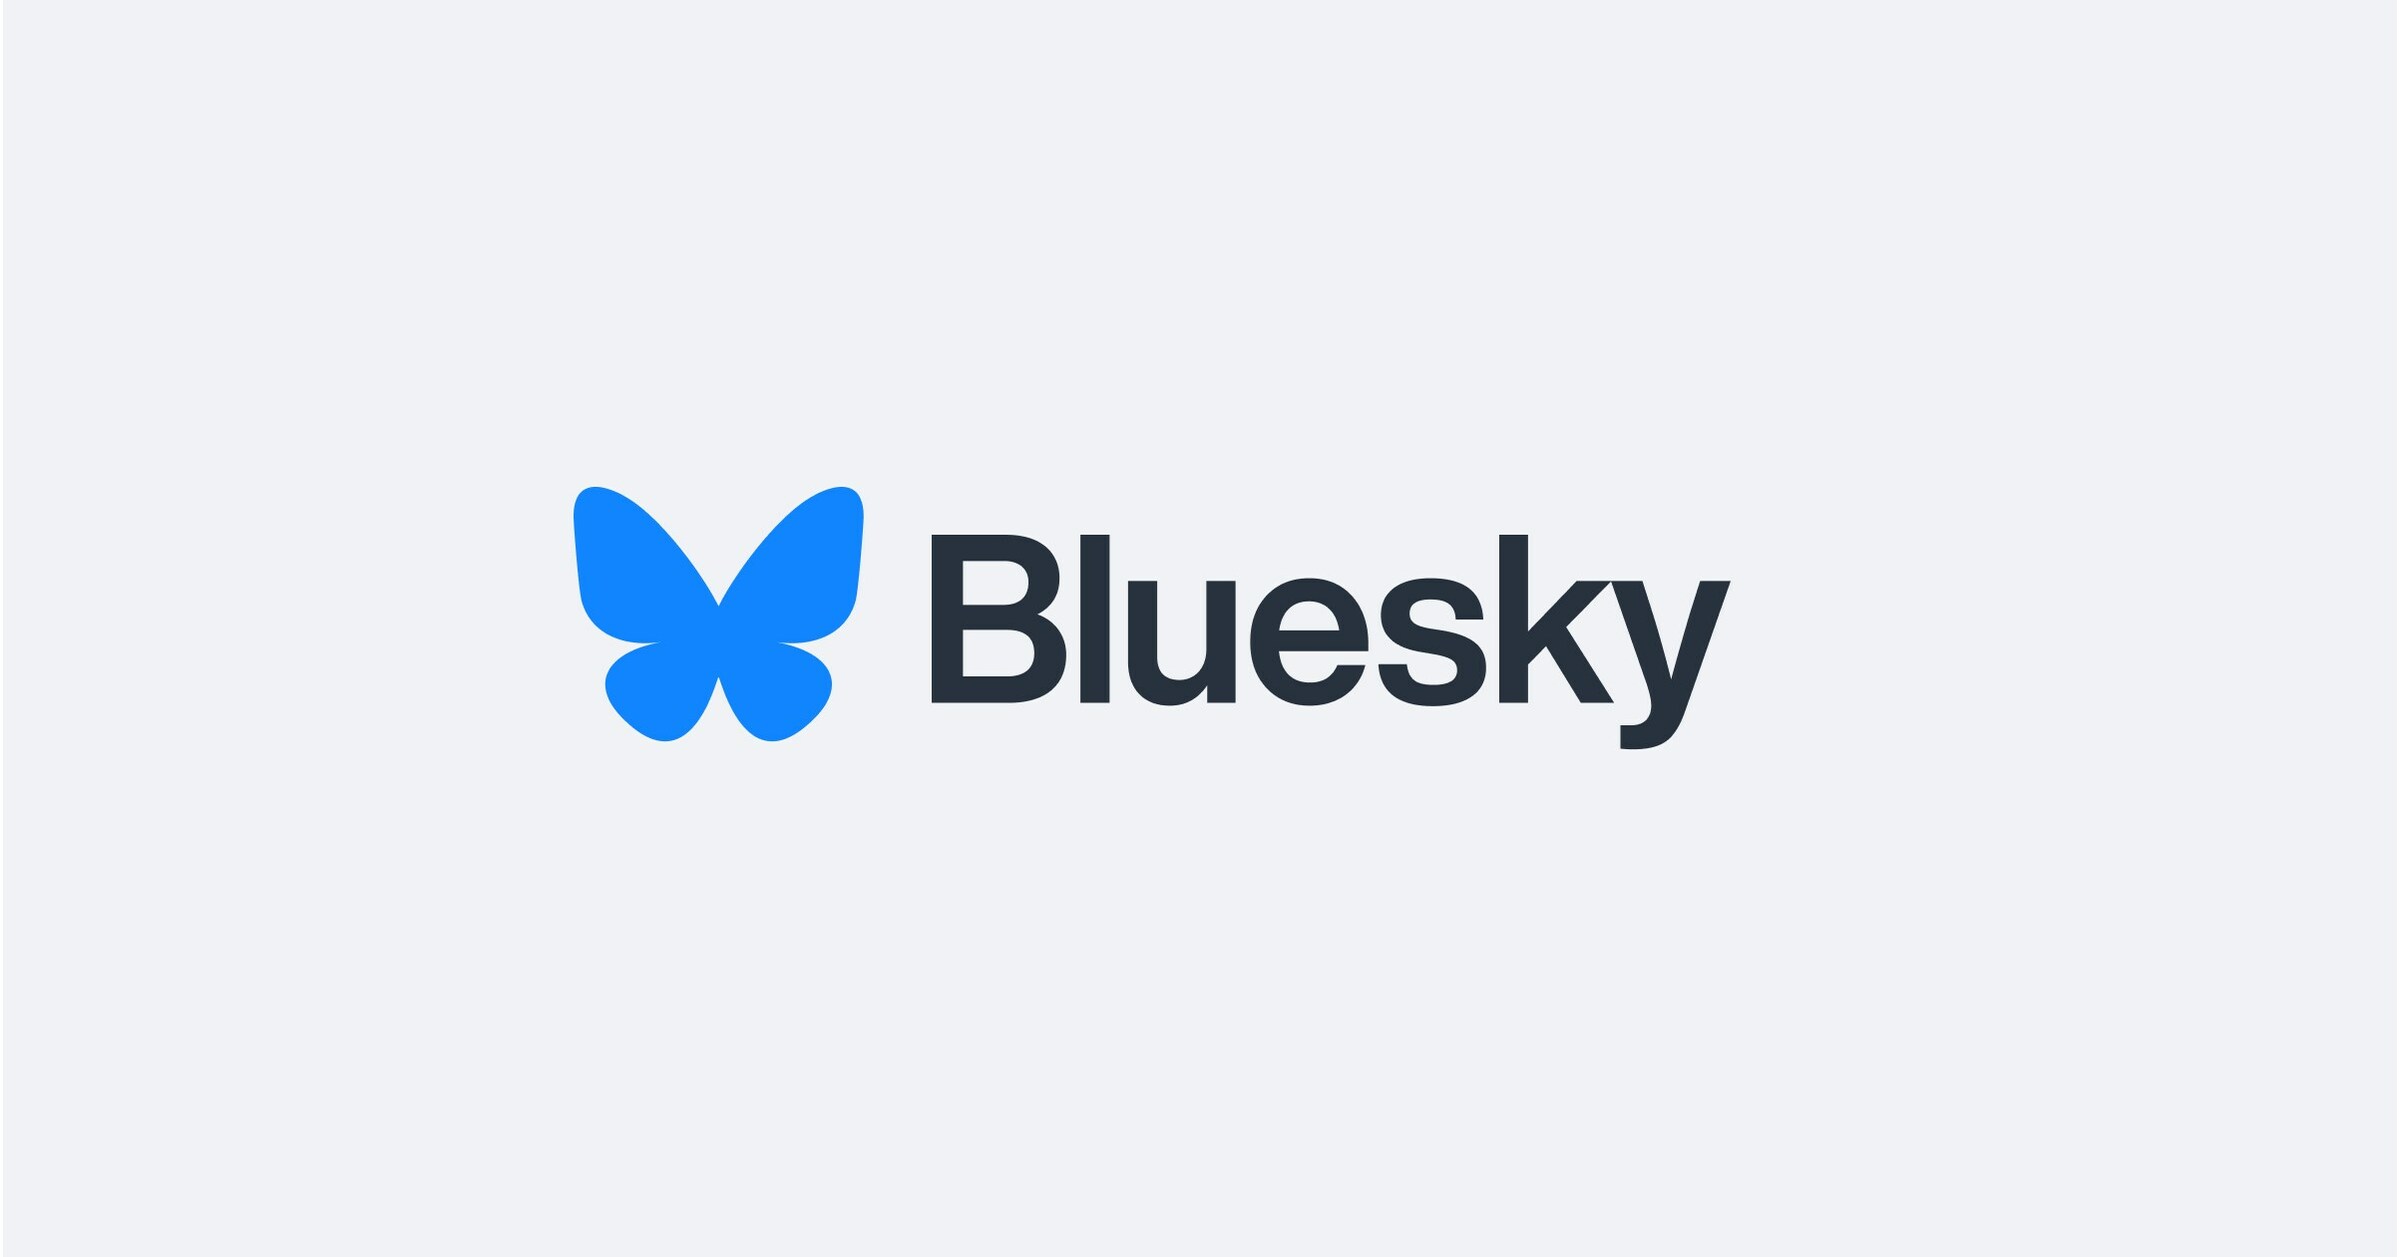 Big Things on the Horizon: Bluesky Opens App to Everyone